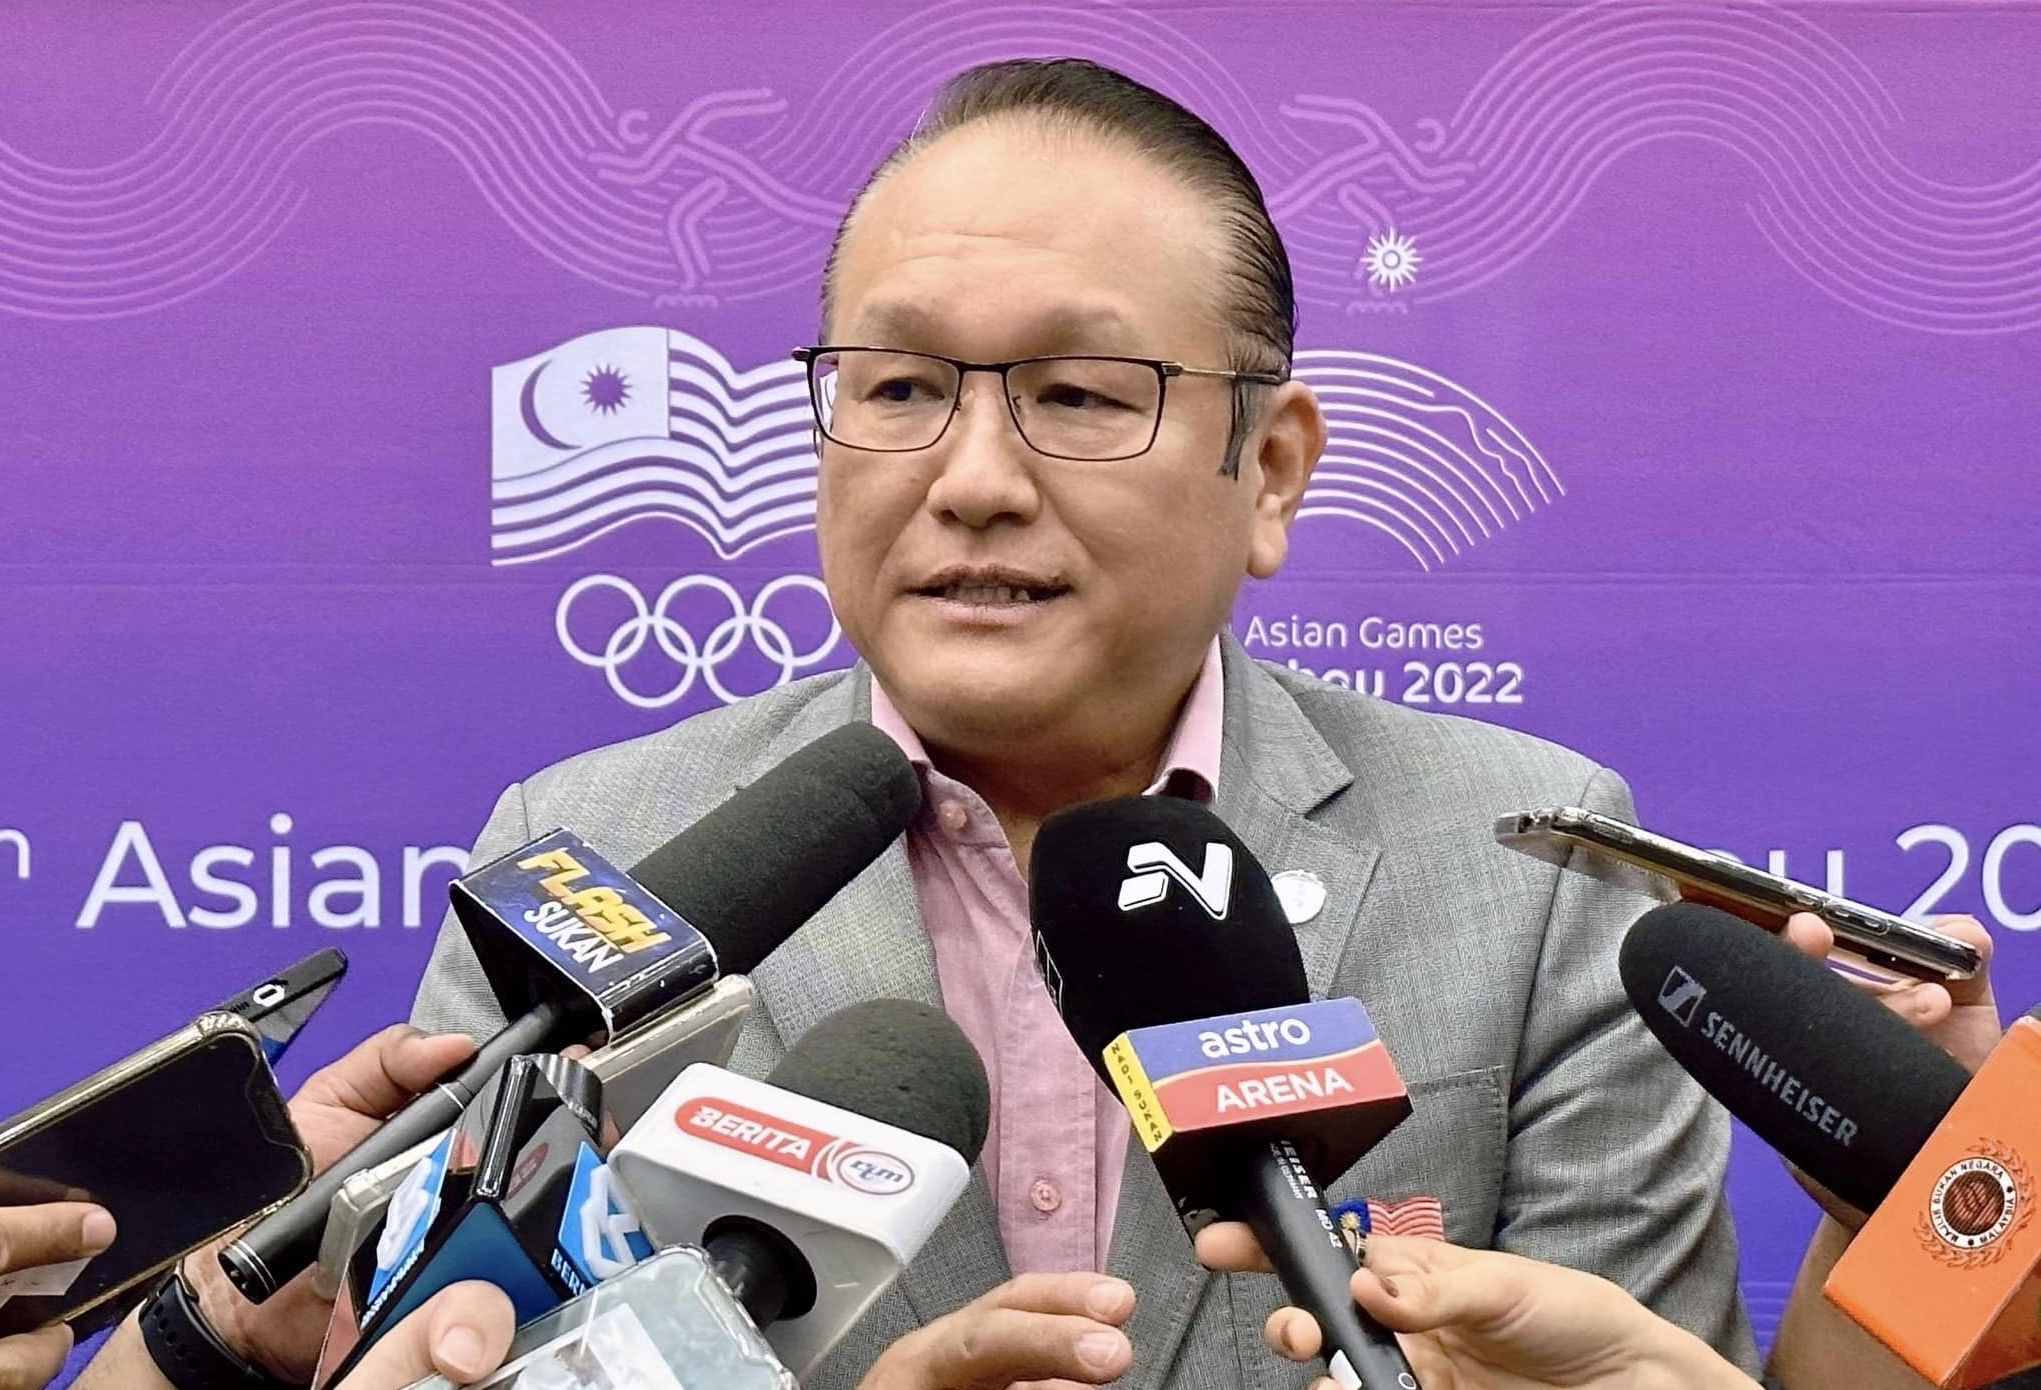 Malaysia’s Asian Games CDM pays courtesy call to China’s Ambassador to Malaysia